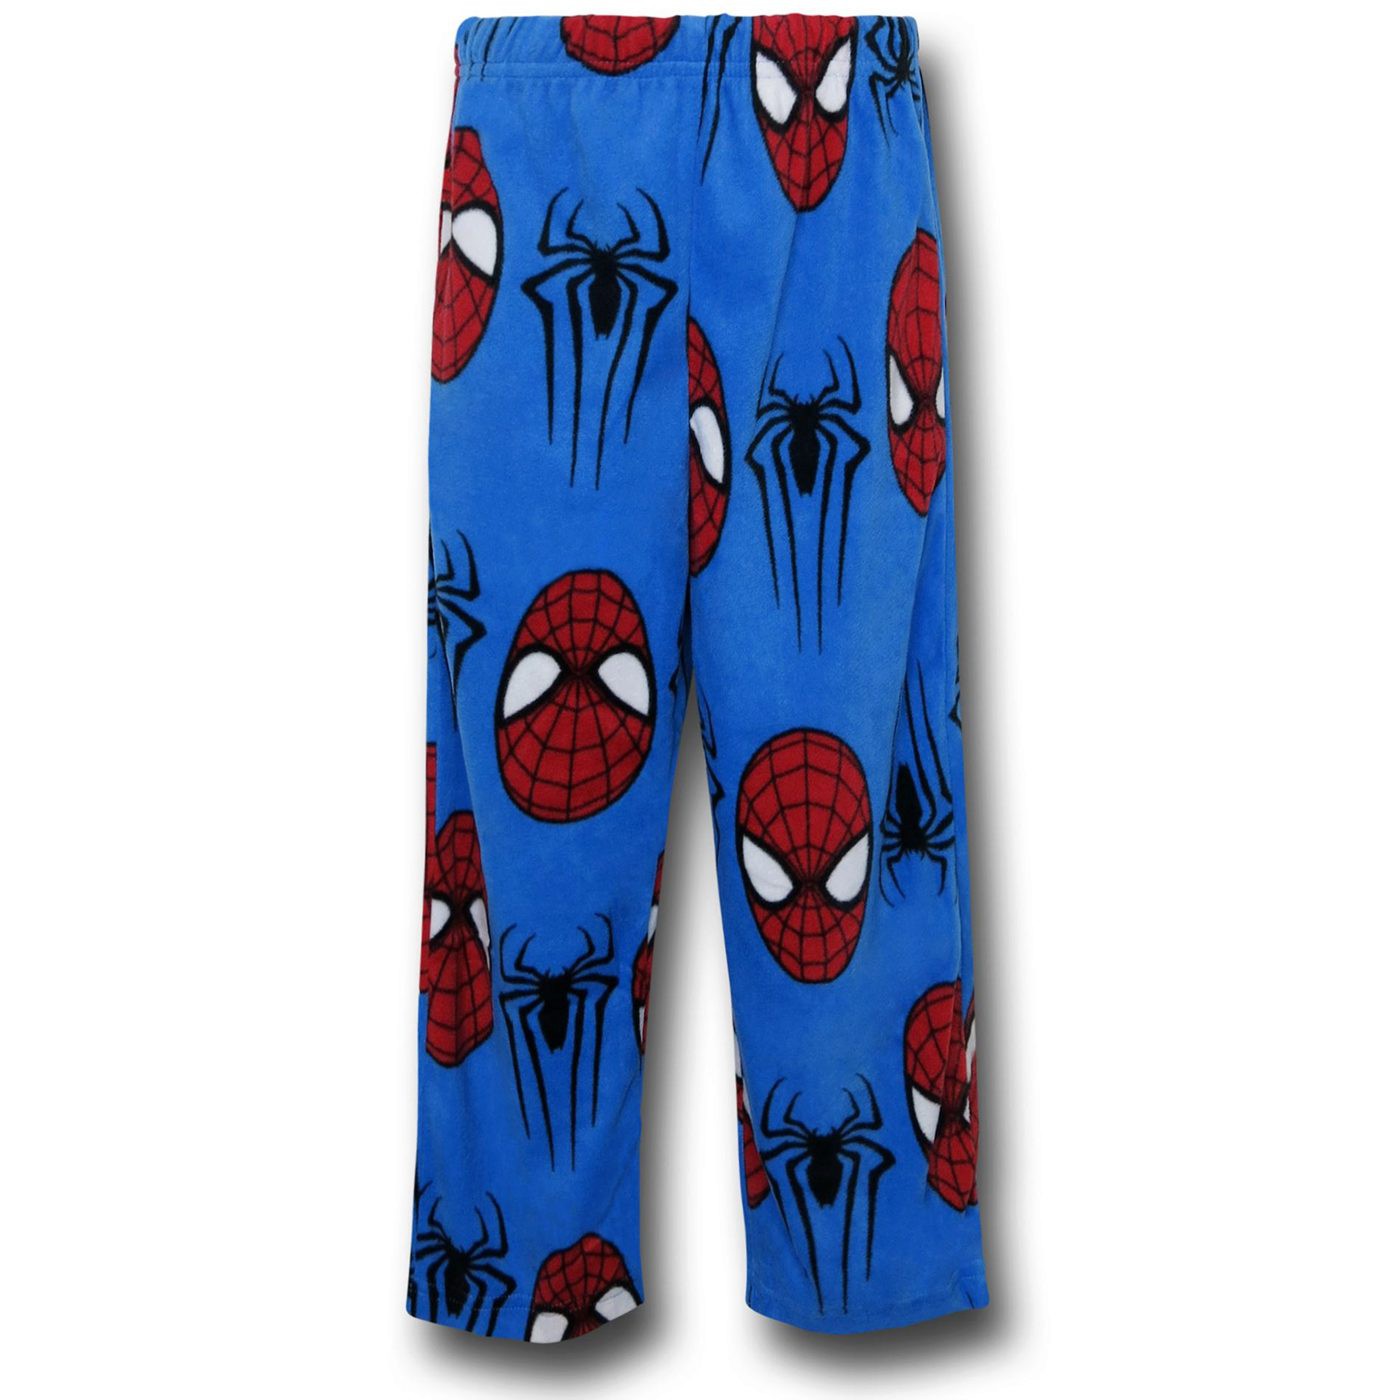 Spiderman Red Sleeved 2-Piece Kids Pajama Set